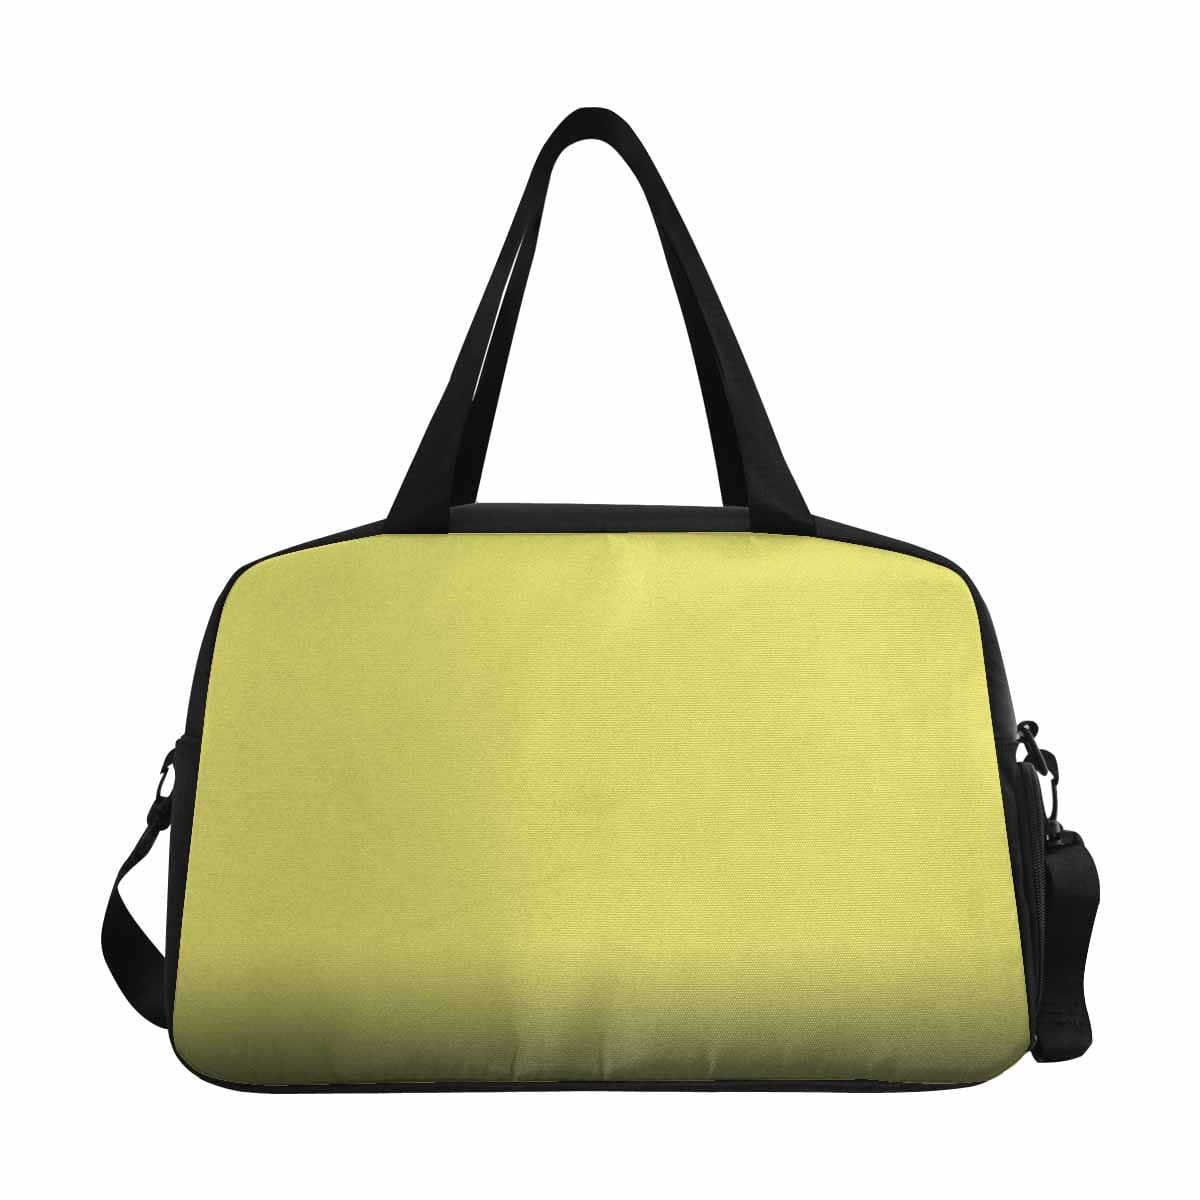 Honeysuckle Yellow Tote And Crossbody Travel Bag - Bags | Travel Bags |